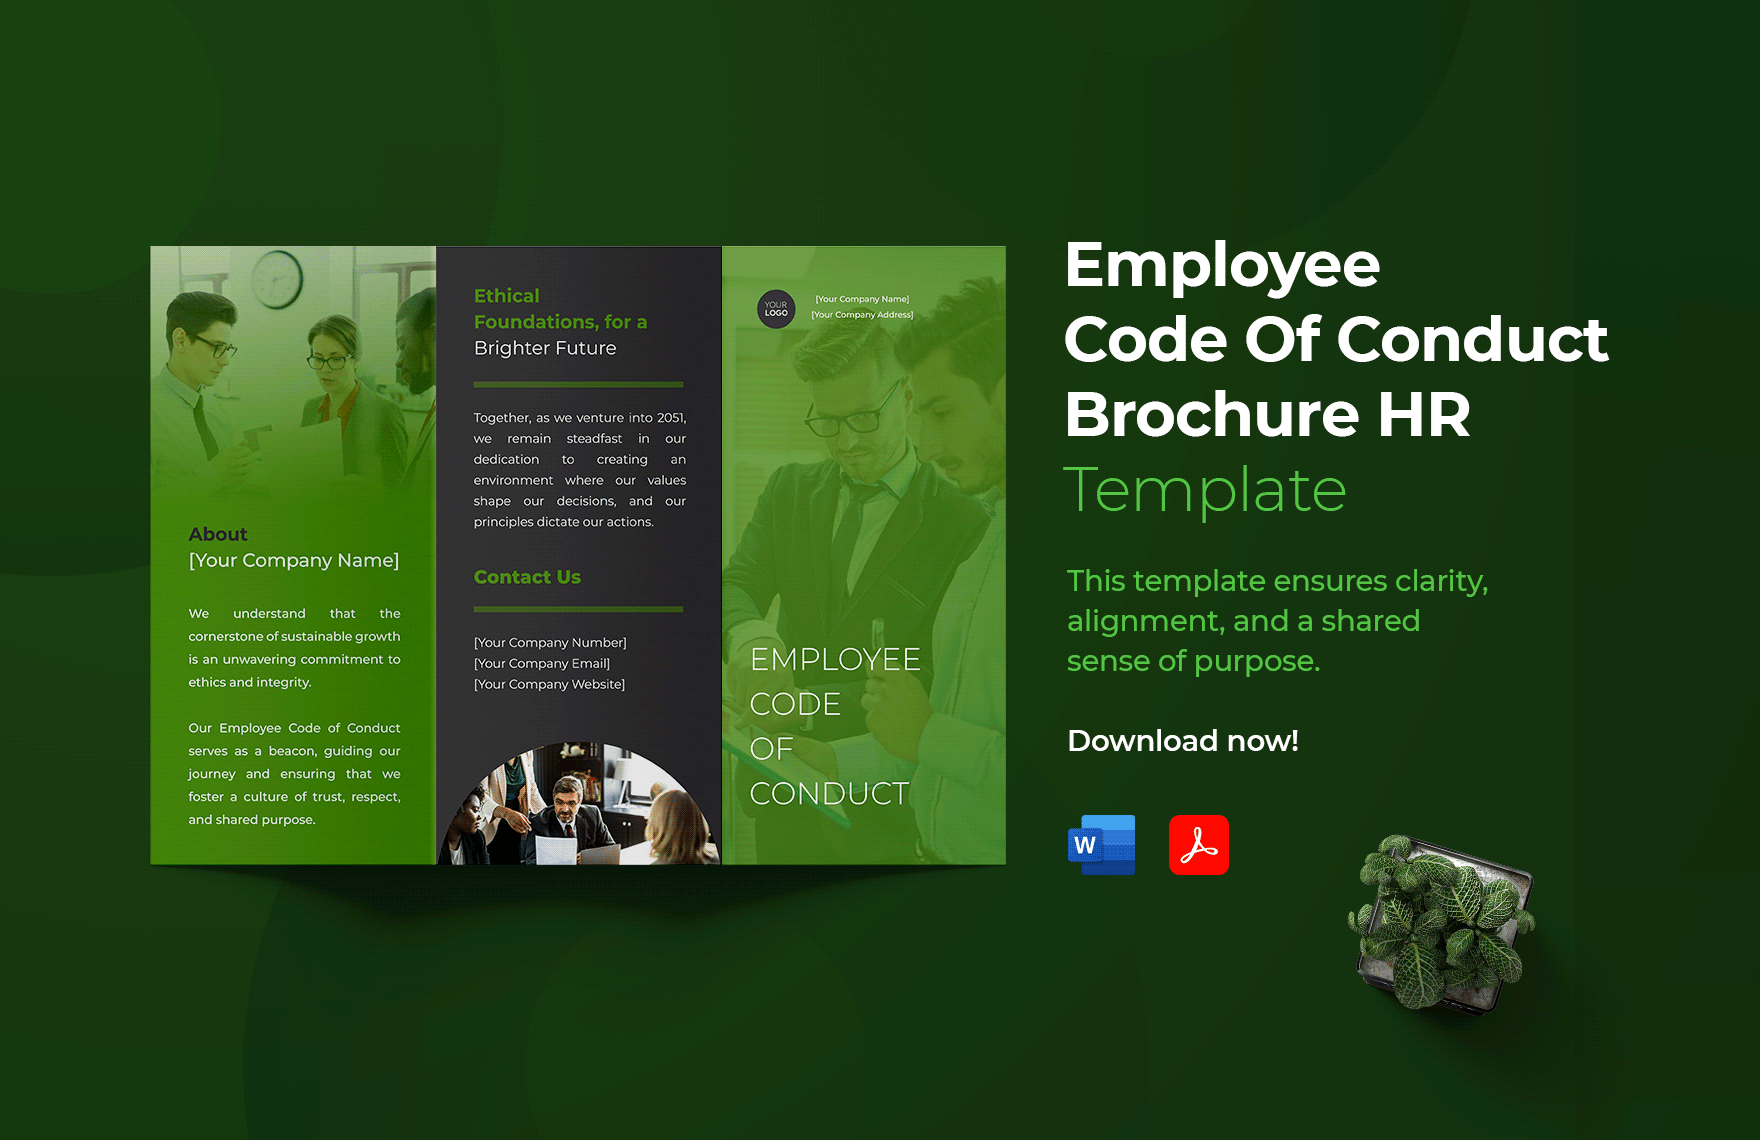 Employee Code Of Conduct Brochure HR Template